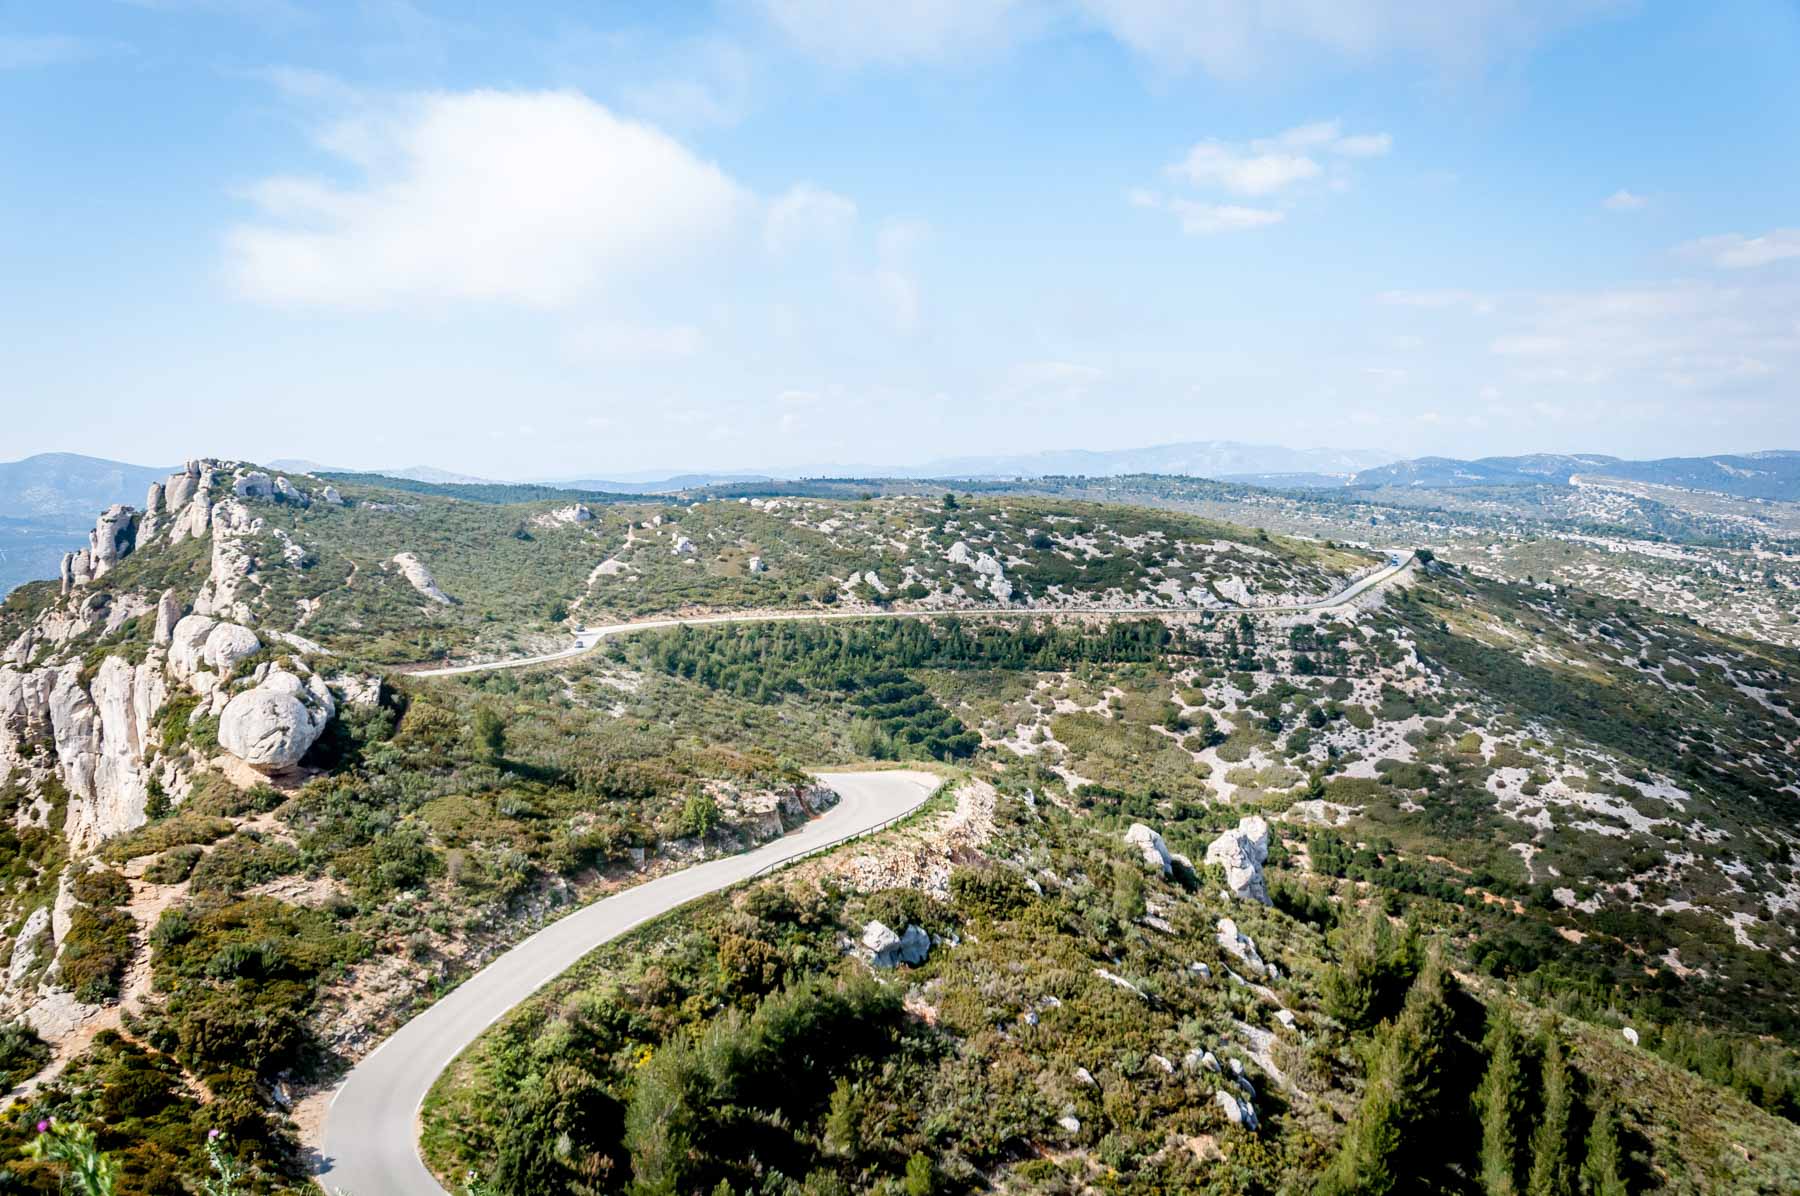 Winding road along a mountainside